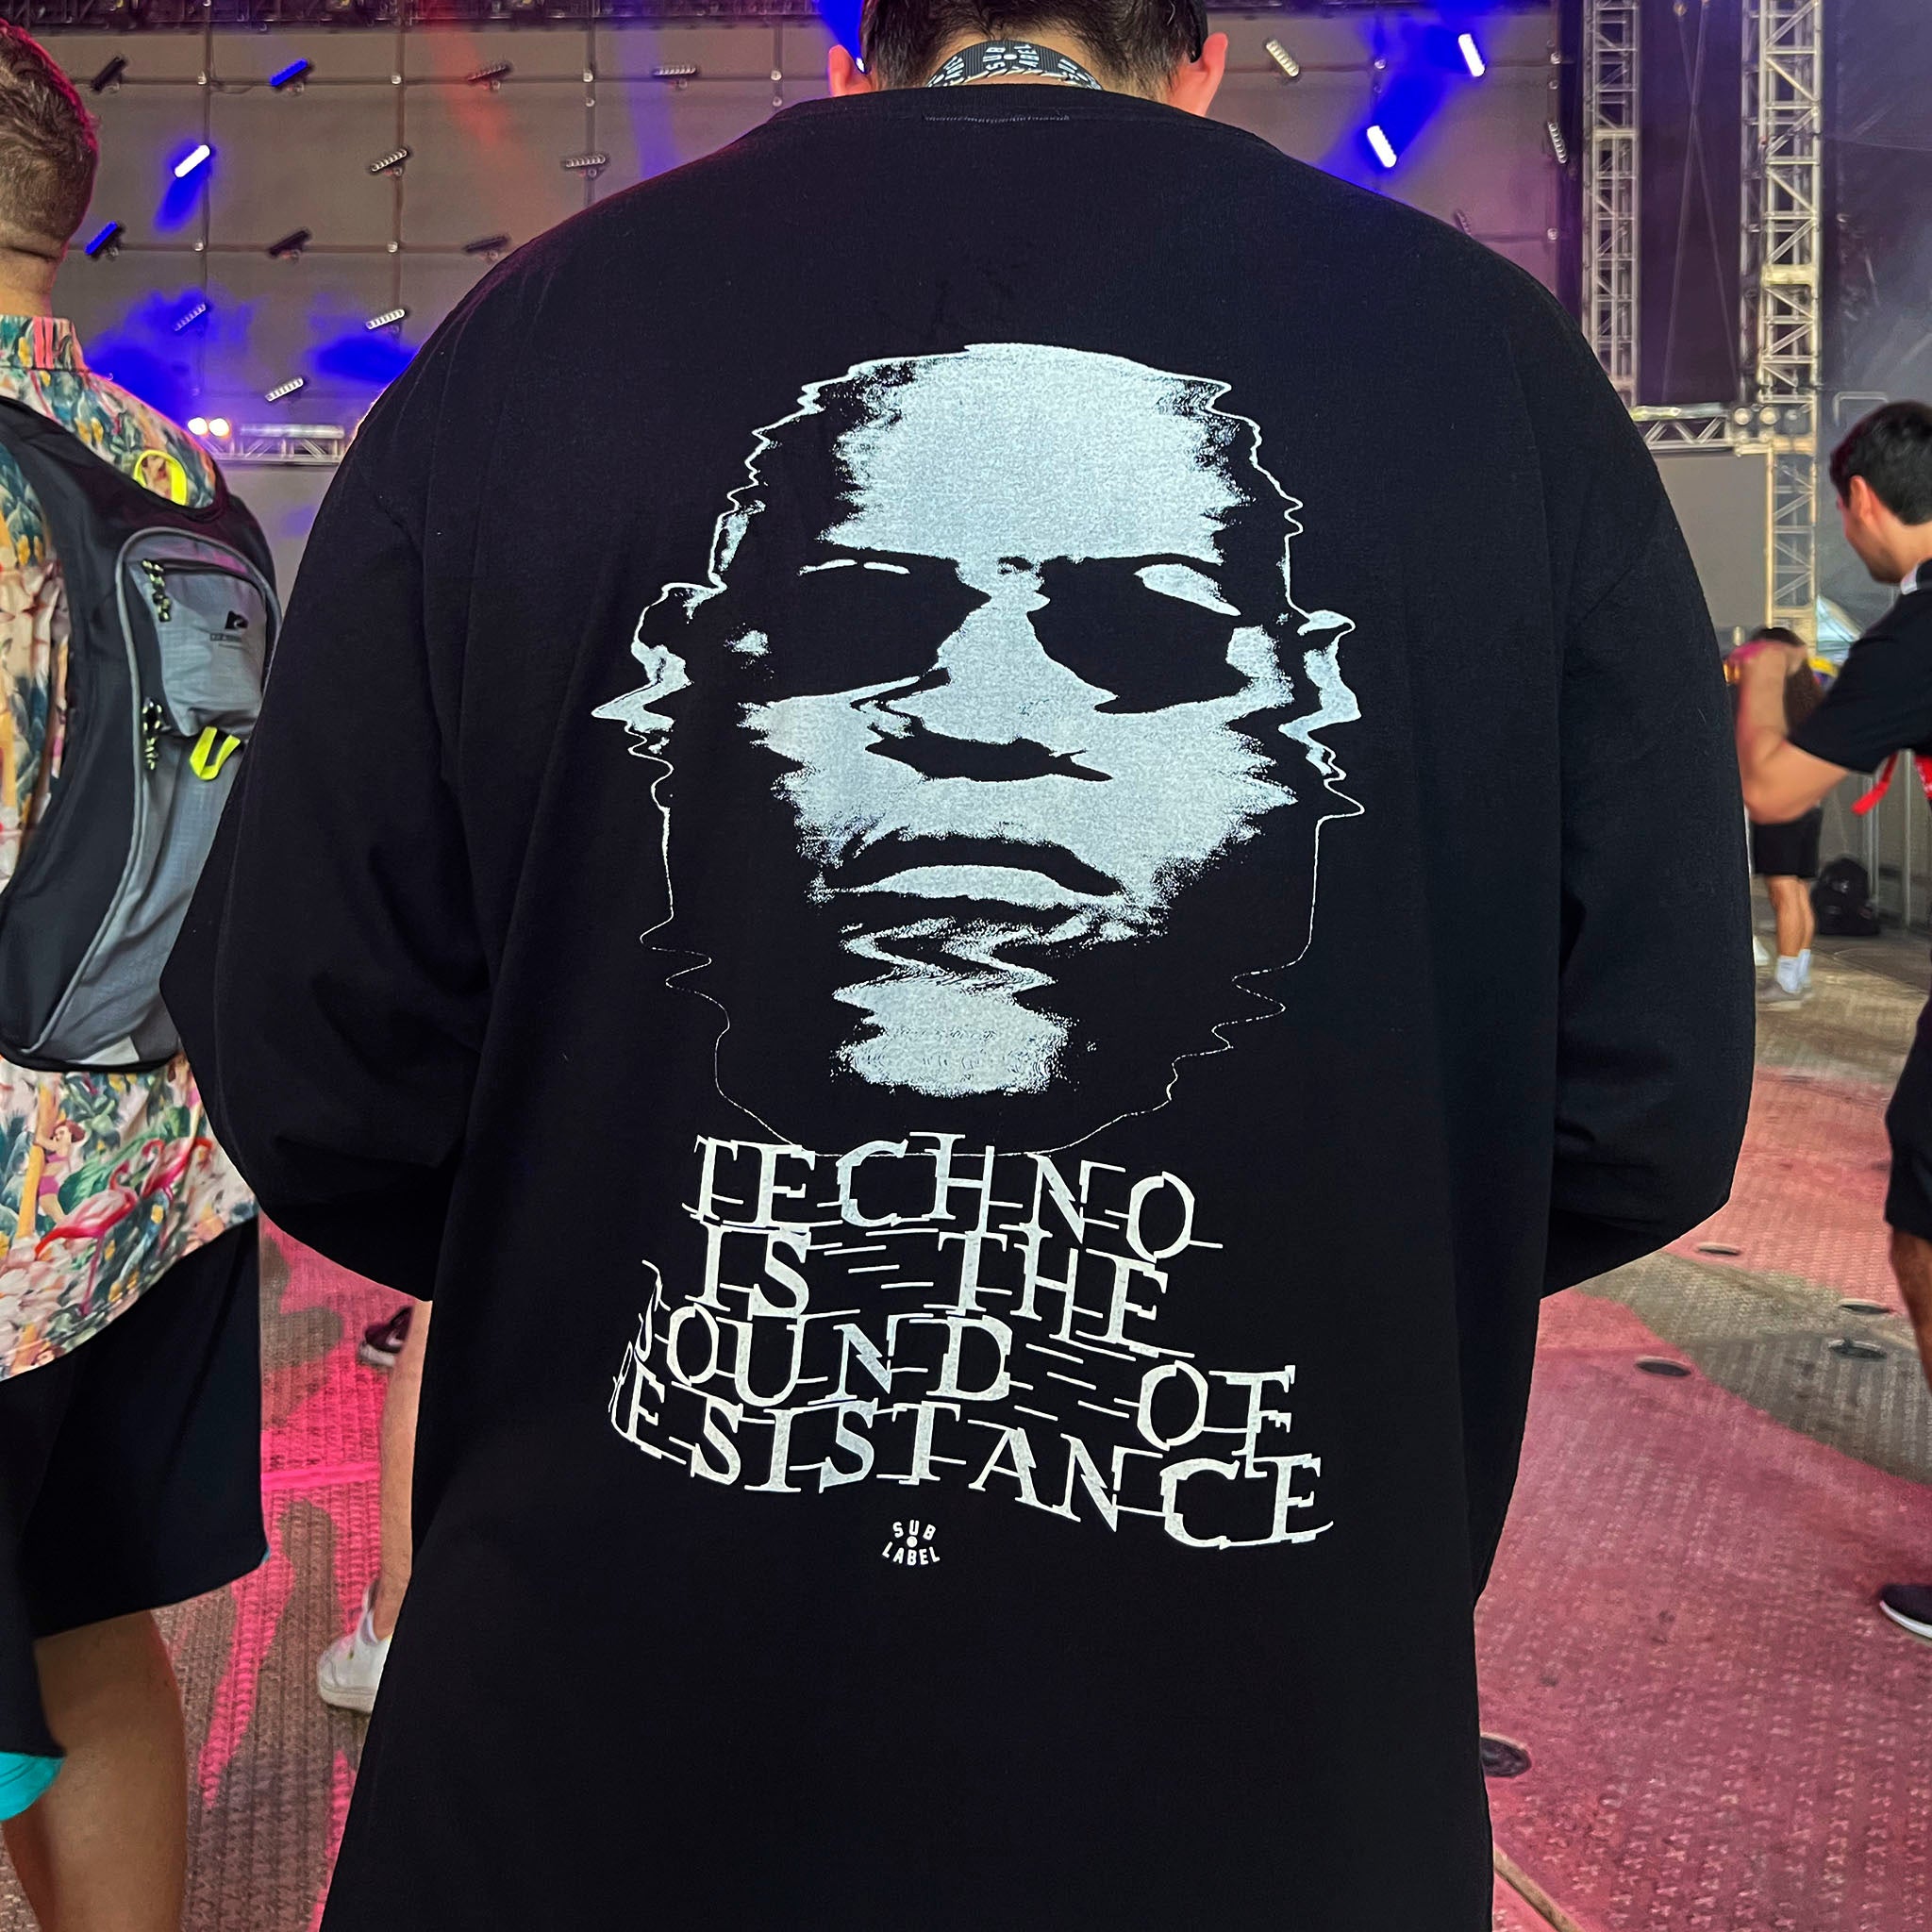 techno resistance • unisex heavyweight oversized tshirt